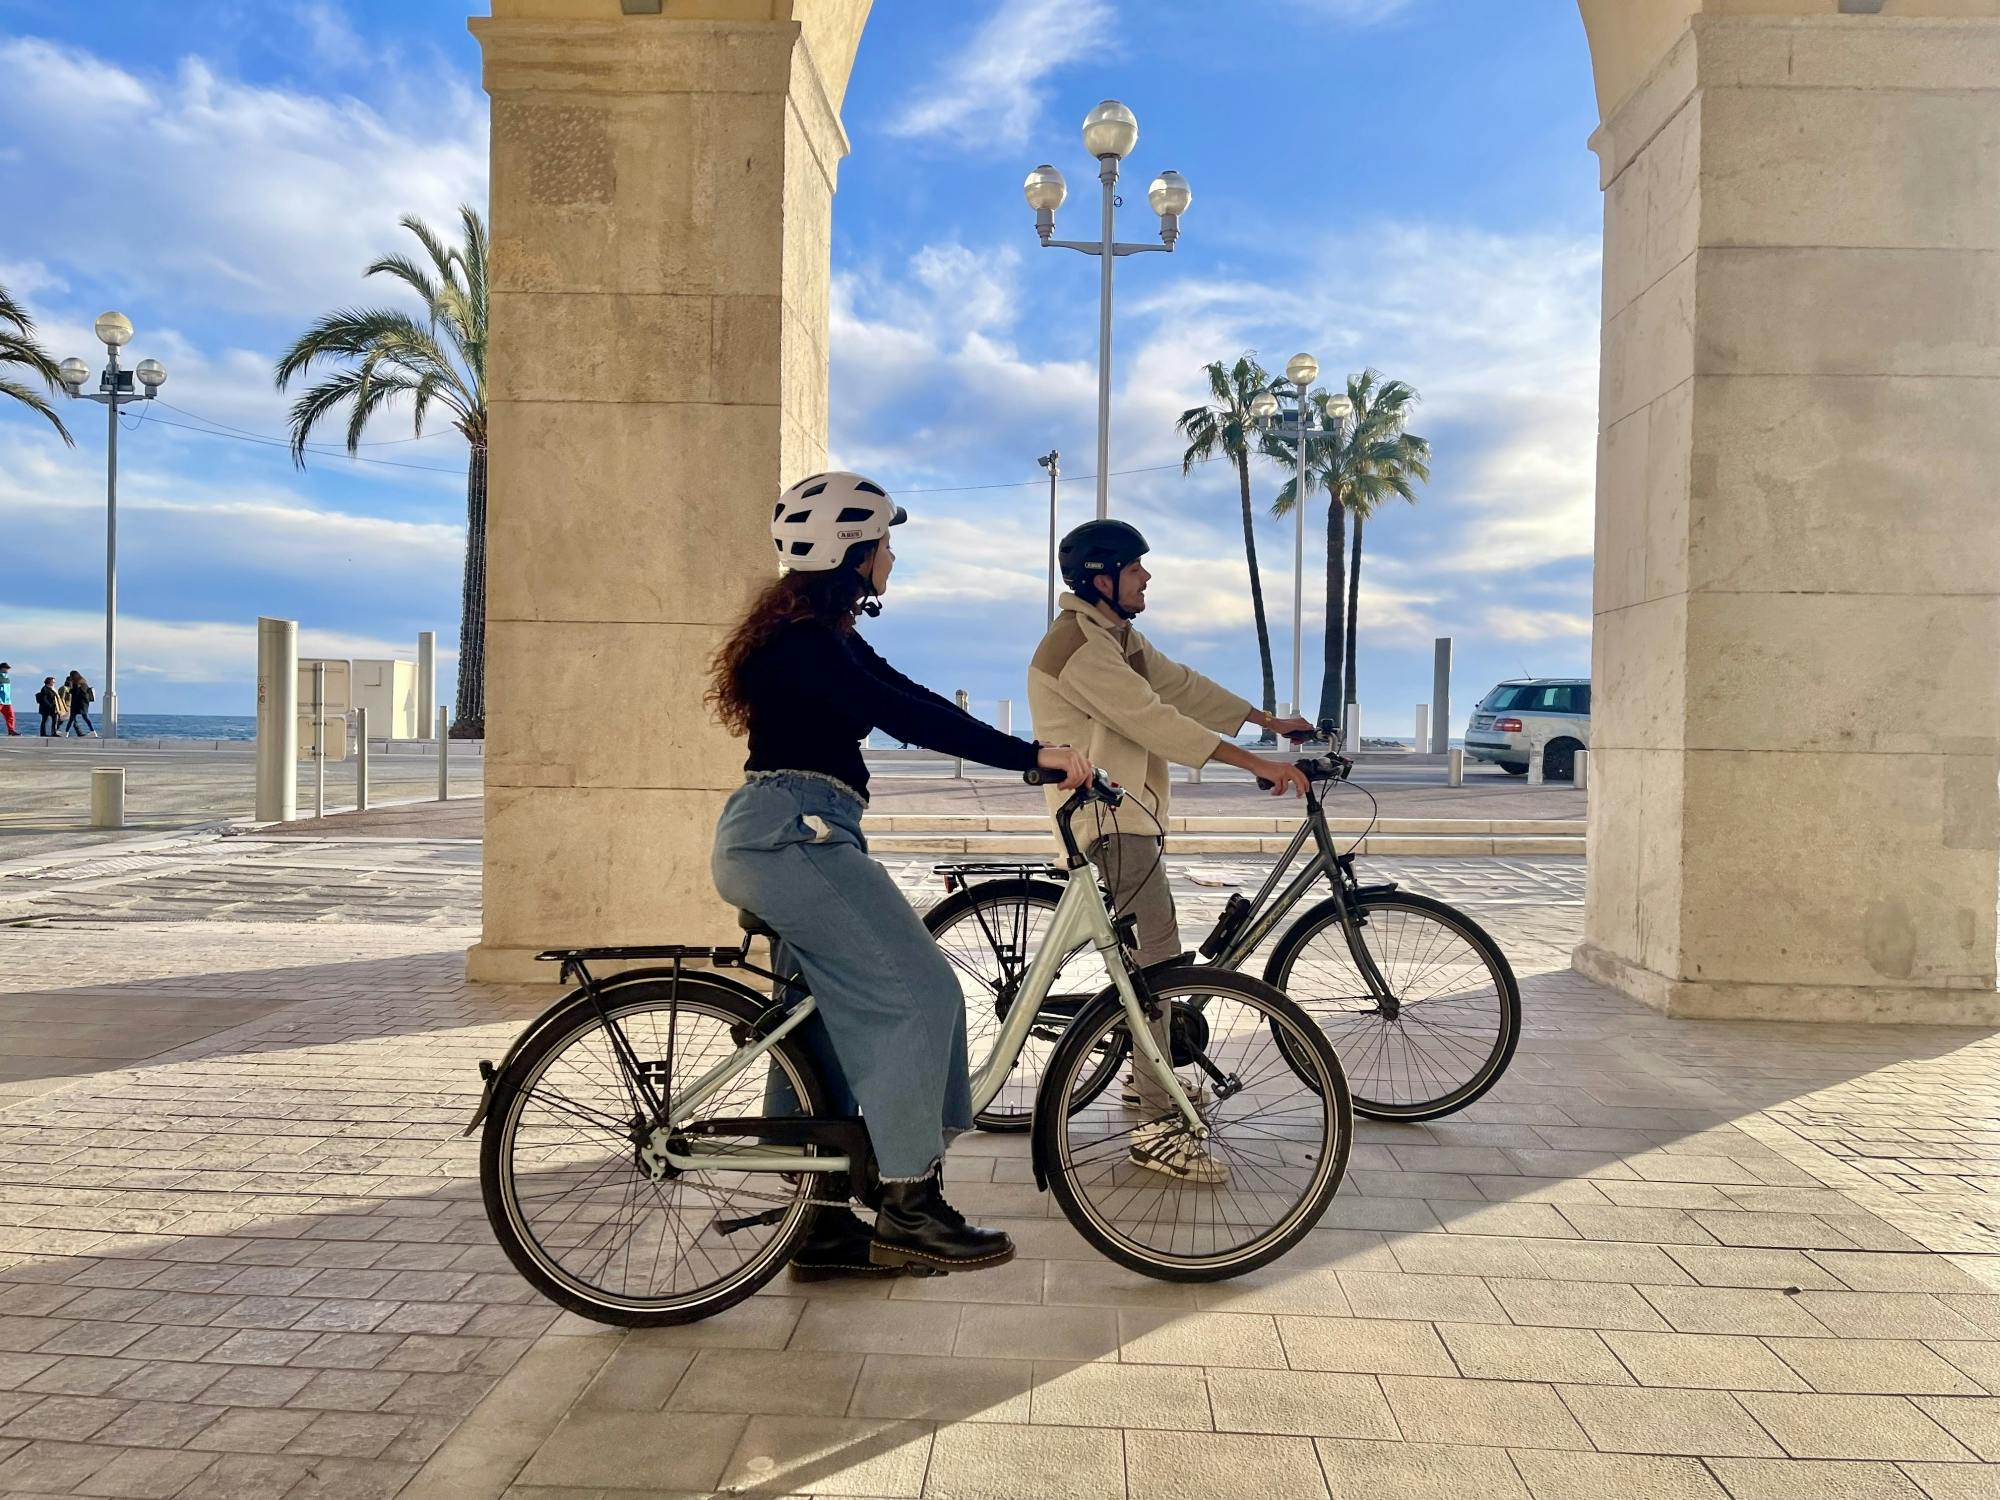 City-Bike-Verleih in Nizza